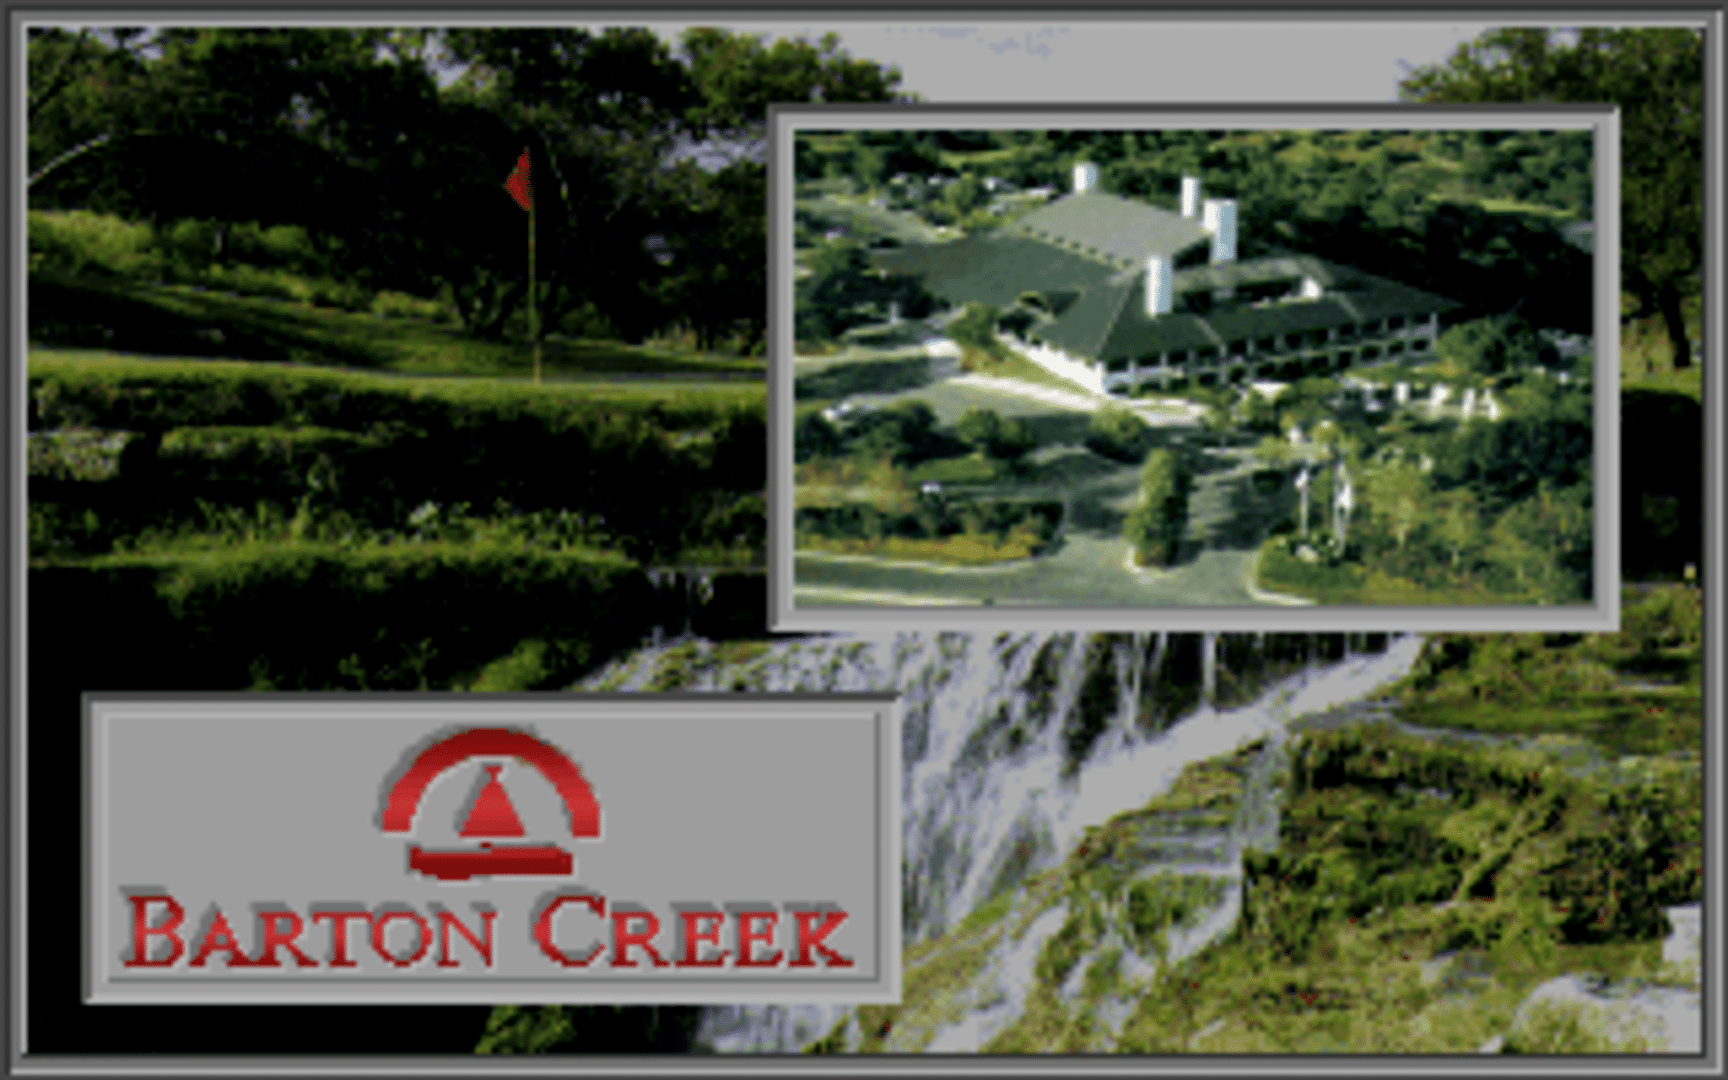 Links: Championship Course - Barton Creek screenshot